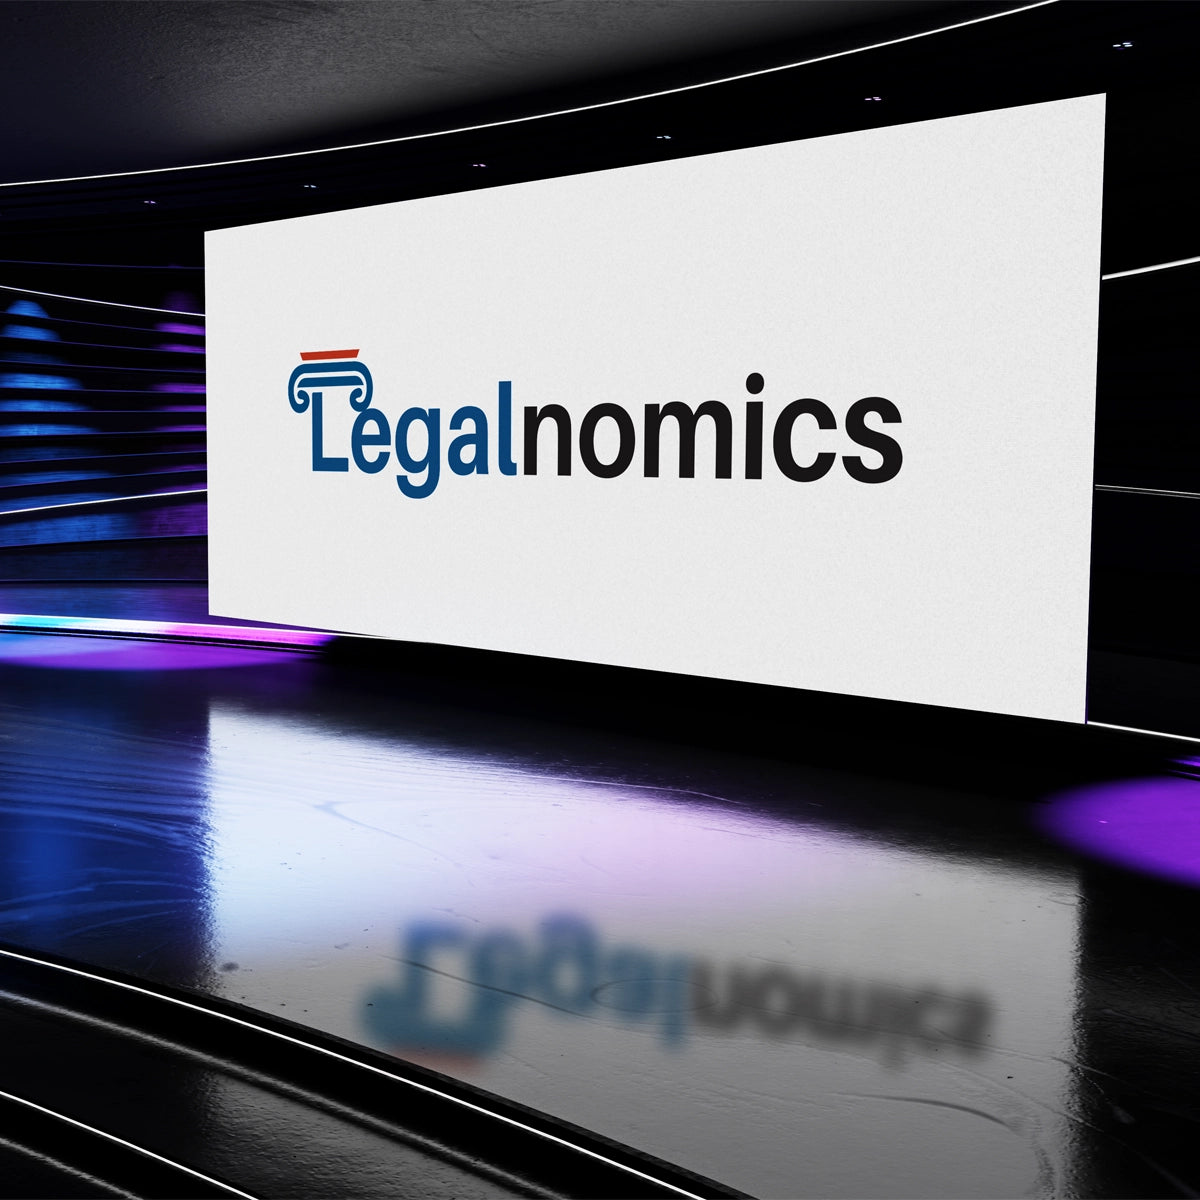 Legalnomics.com